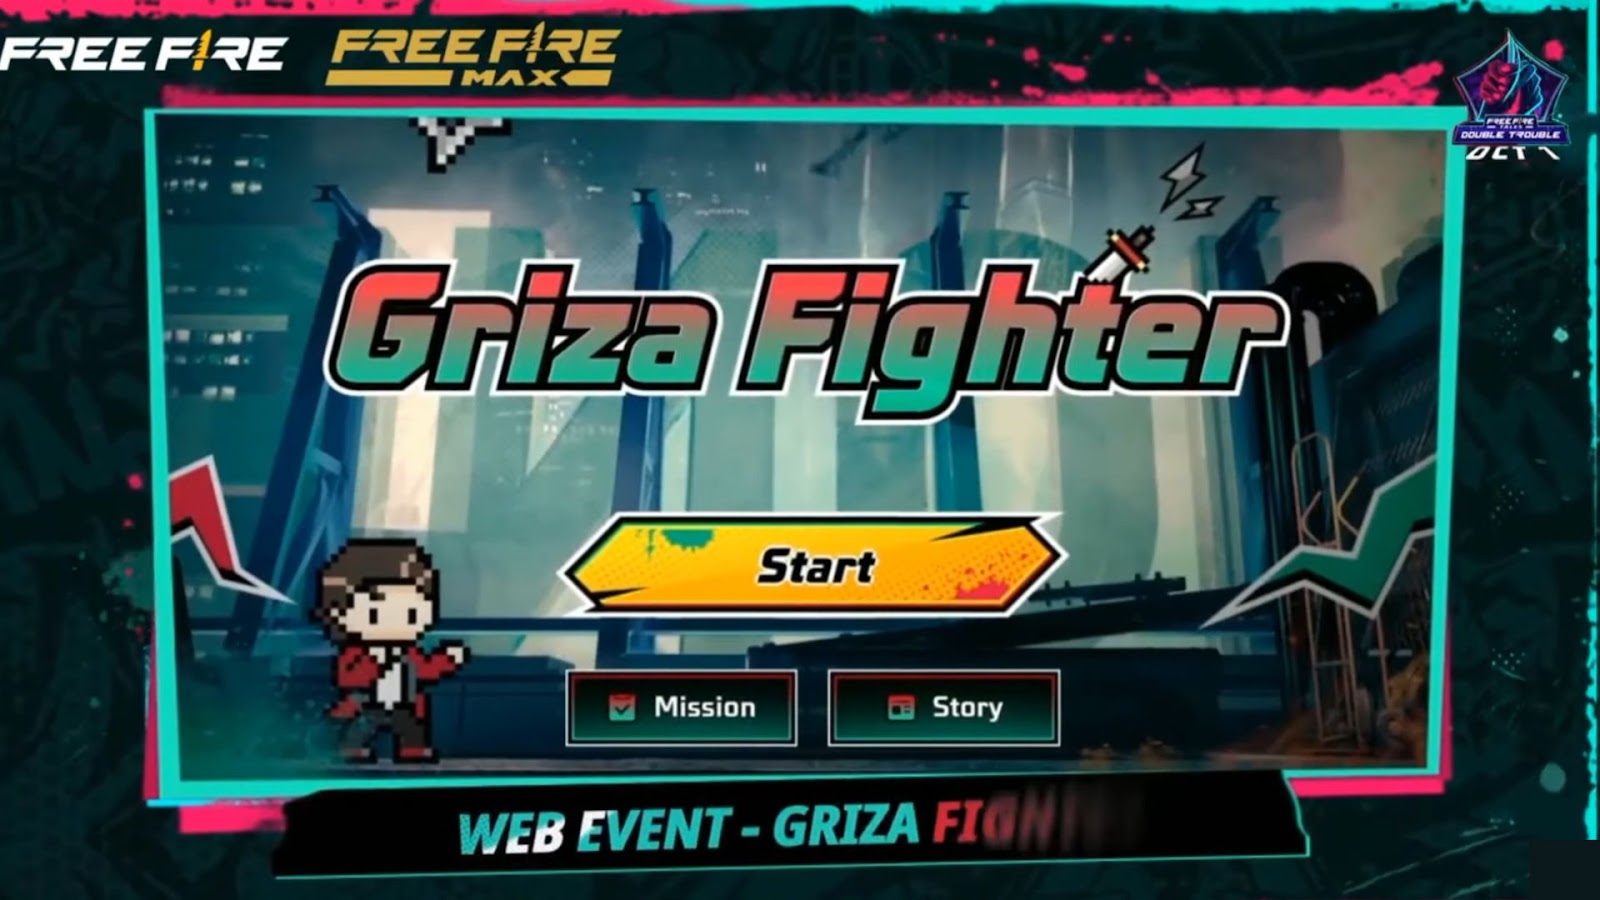 The Griza Fighter Event